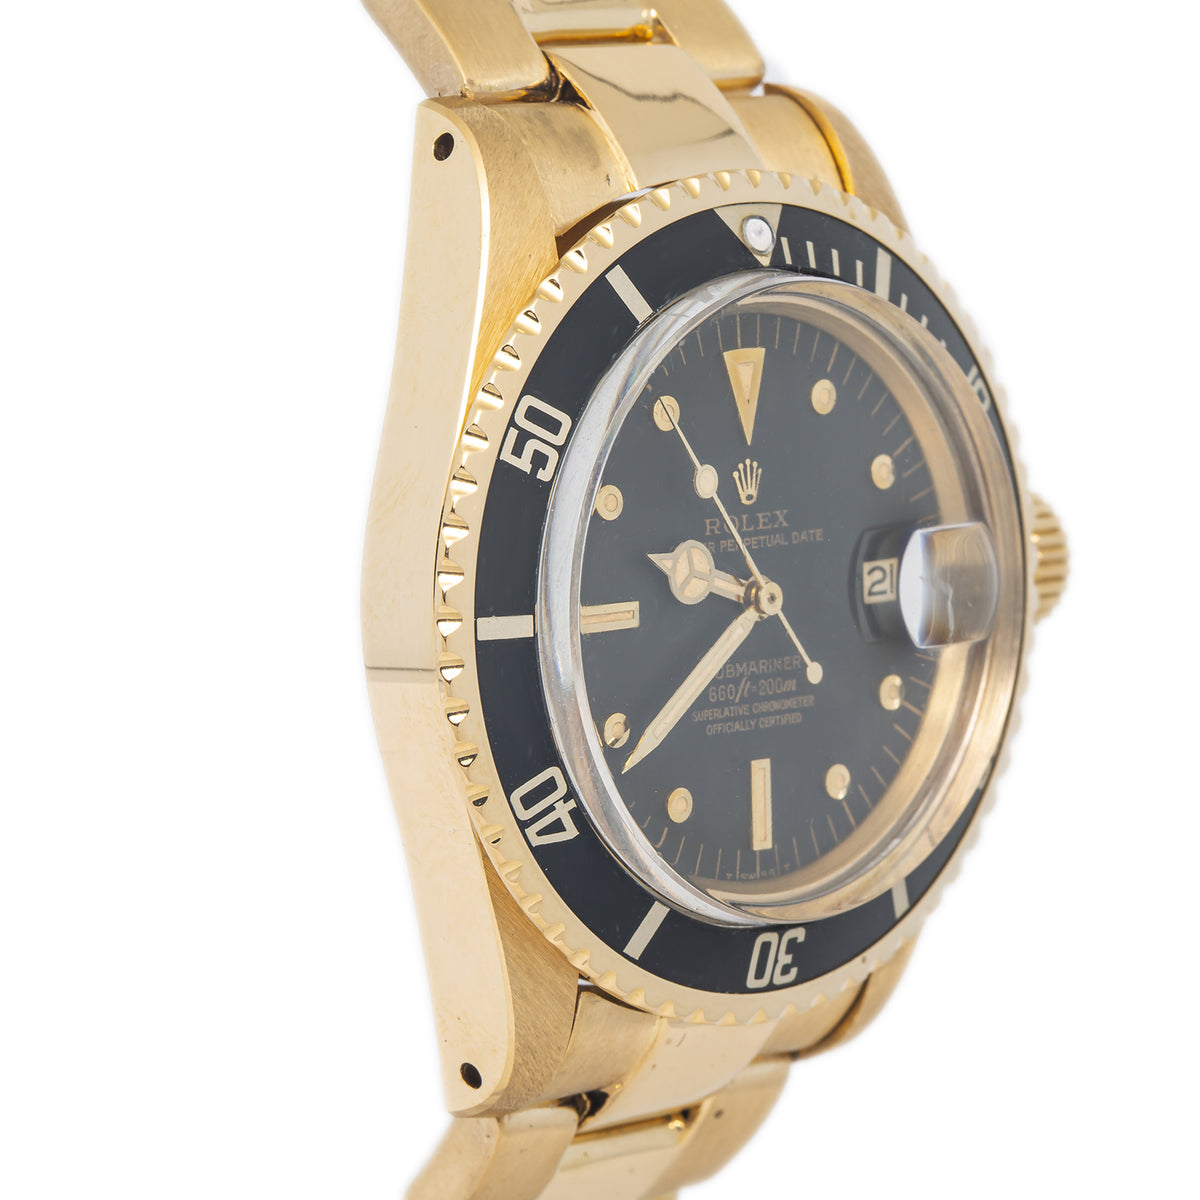 Rolex Submariner 1680 Vintage Gold Black Matte Nipple Dial Watch 40mm 1970 Paper